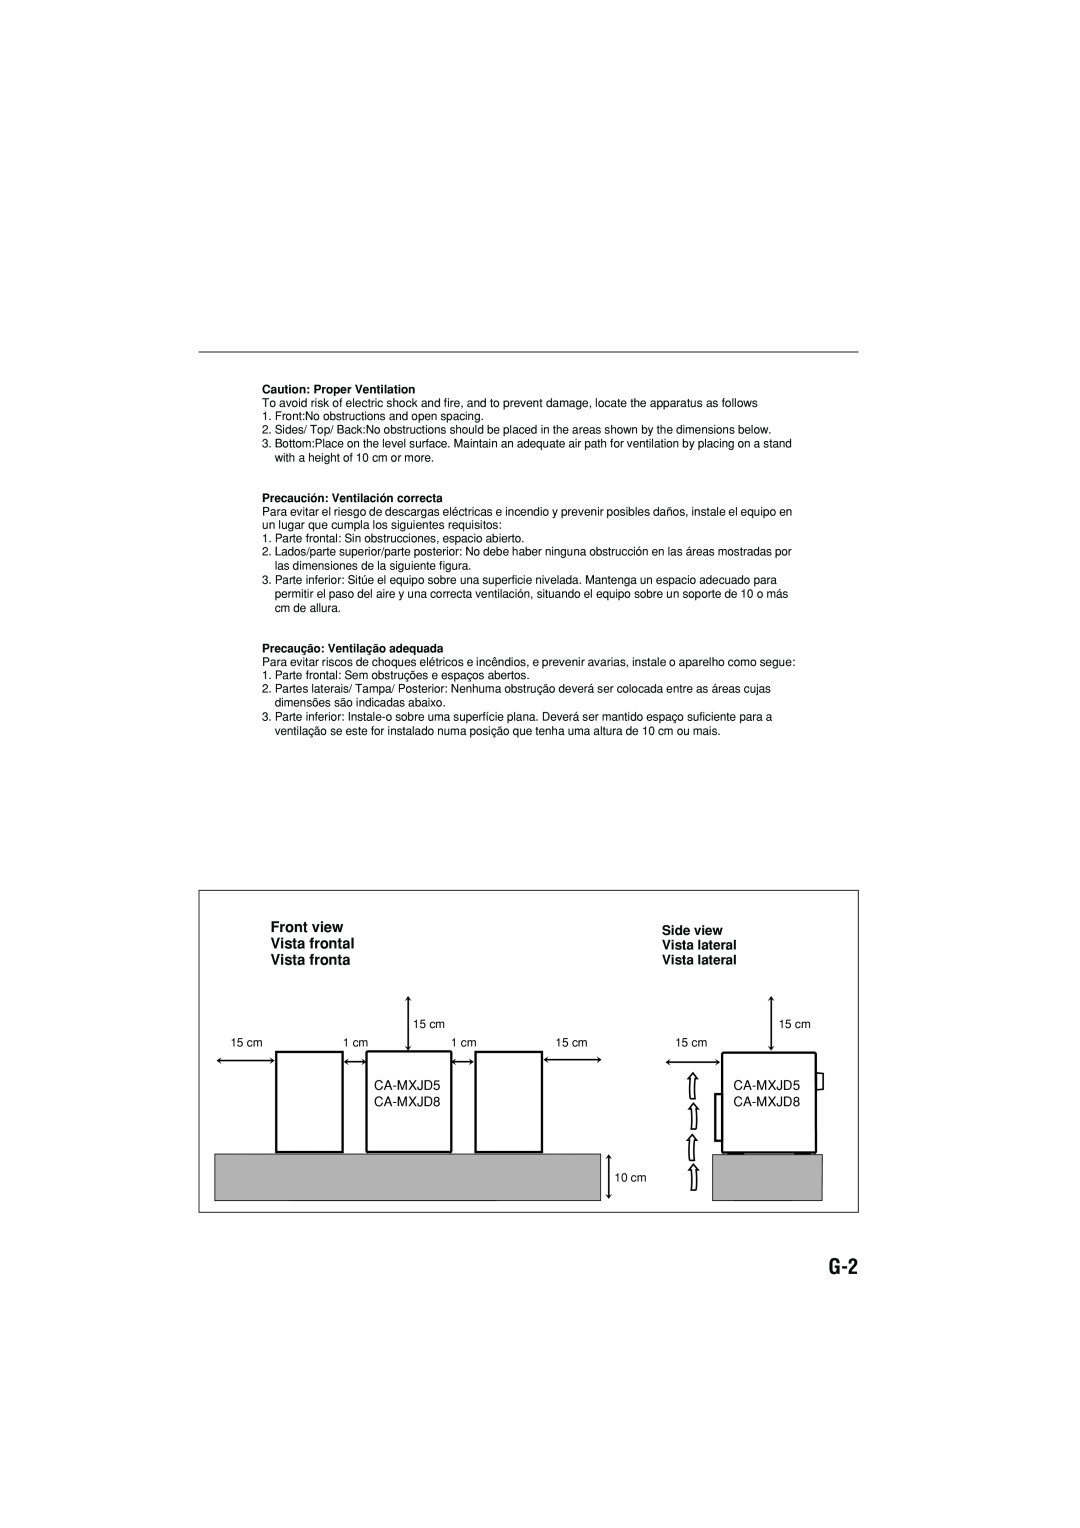 JVC CA-MXJD8UW manual Front view, Vista frontal, Side view, Vista lateral, Caution: Proper Ventilation 